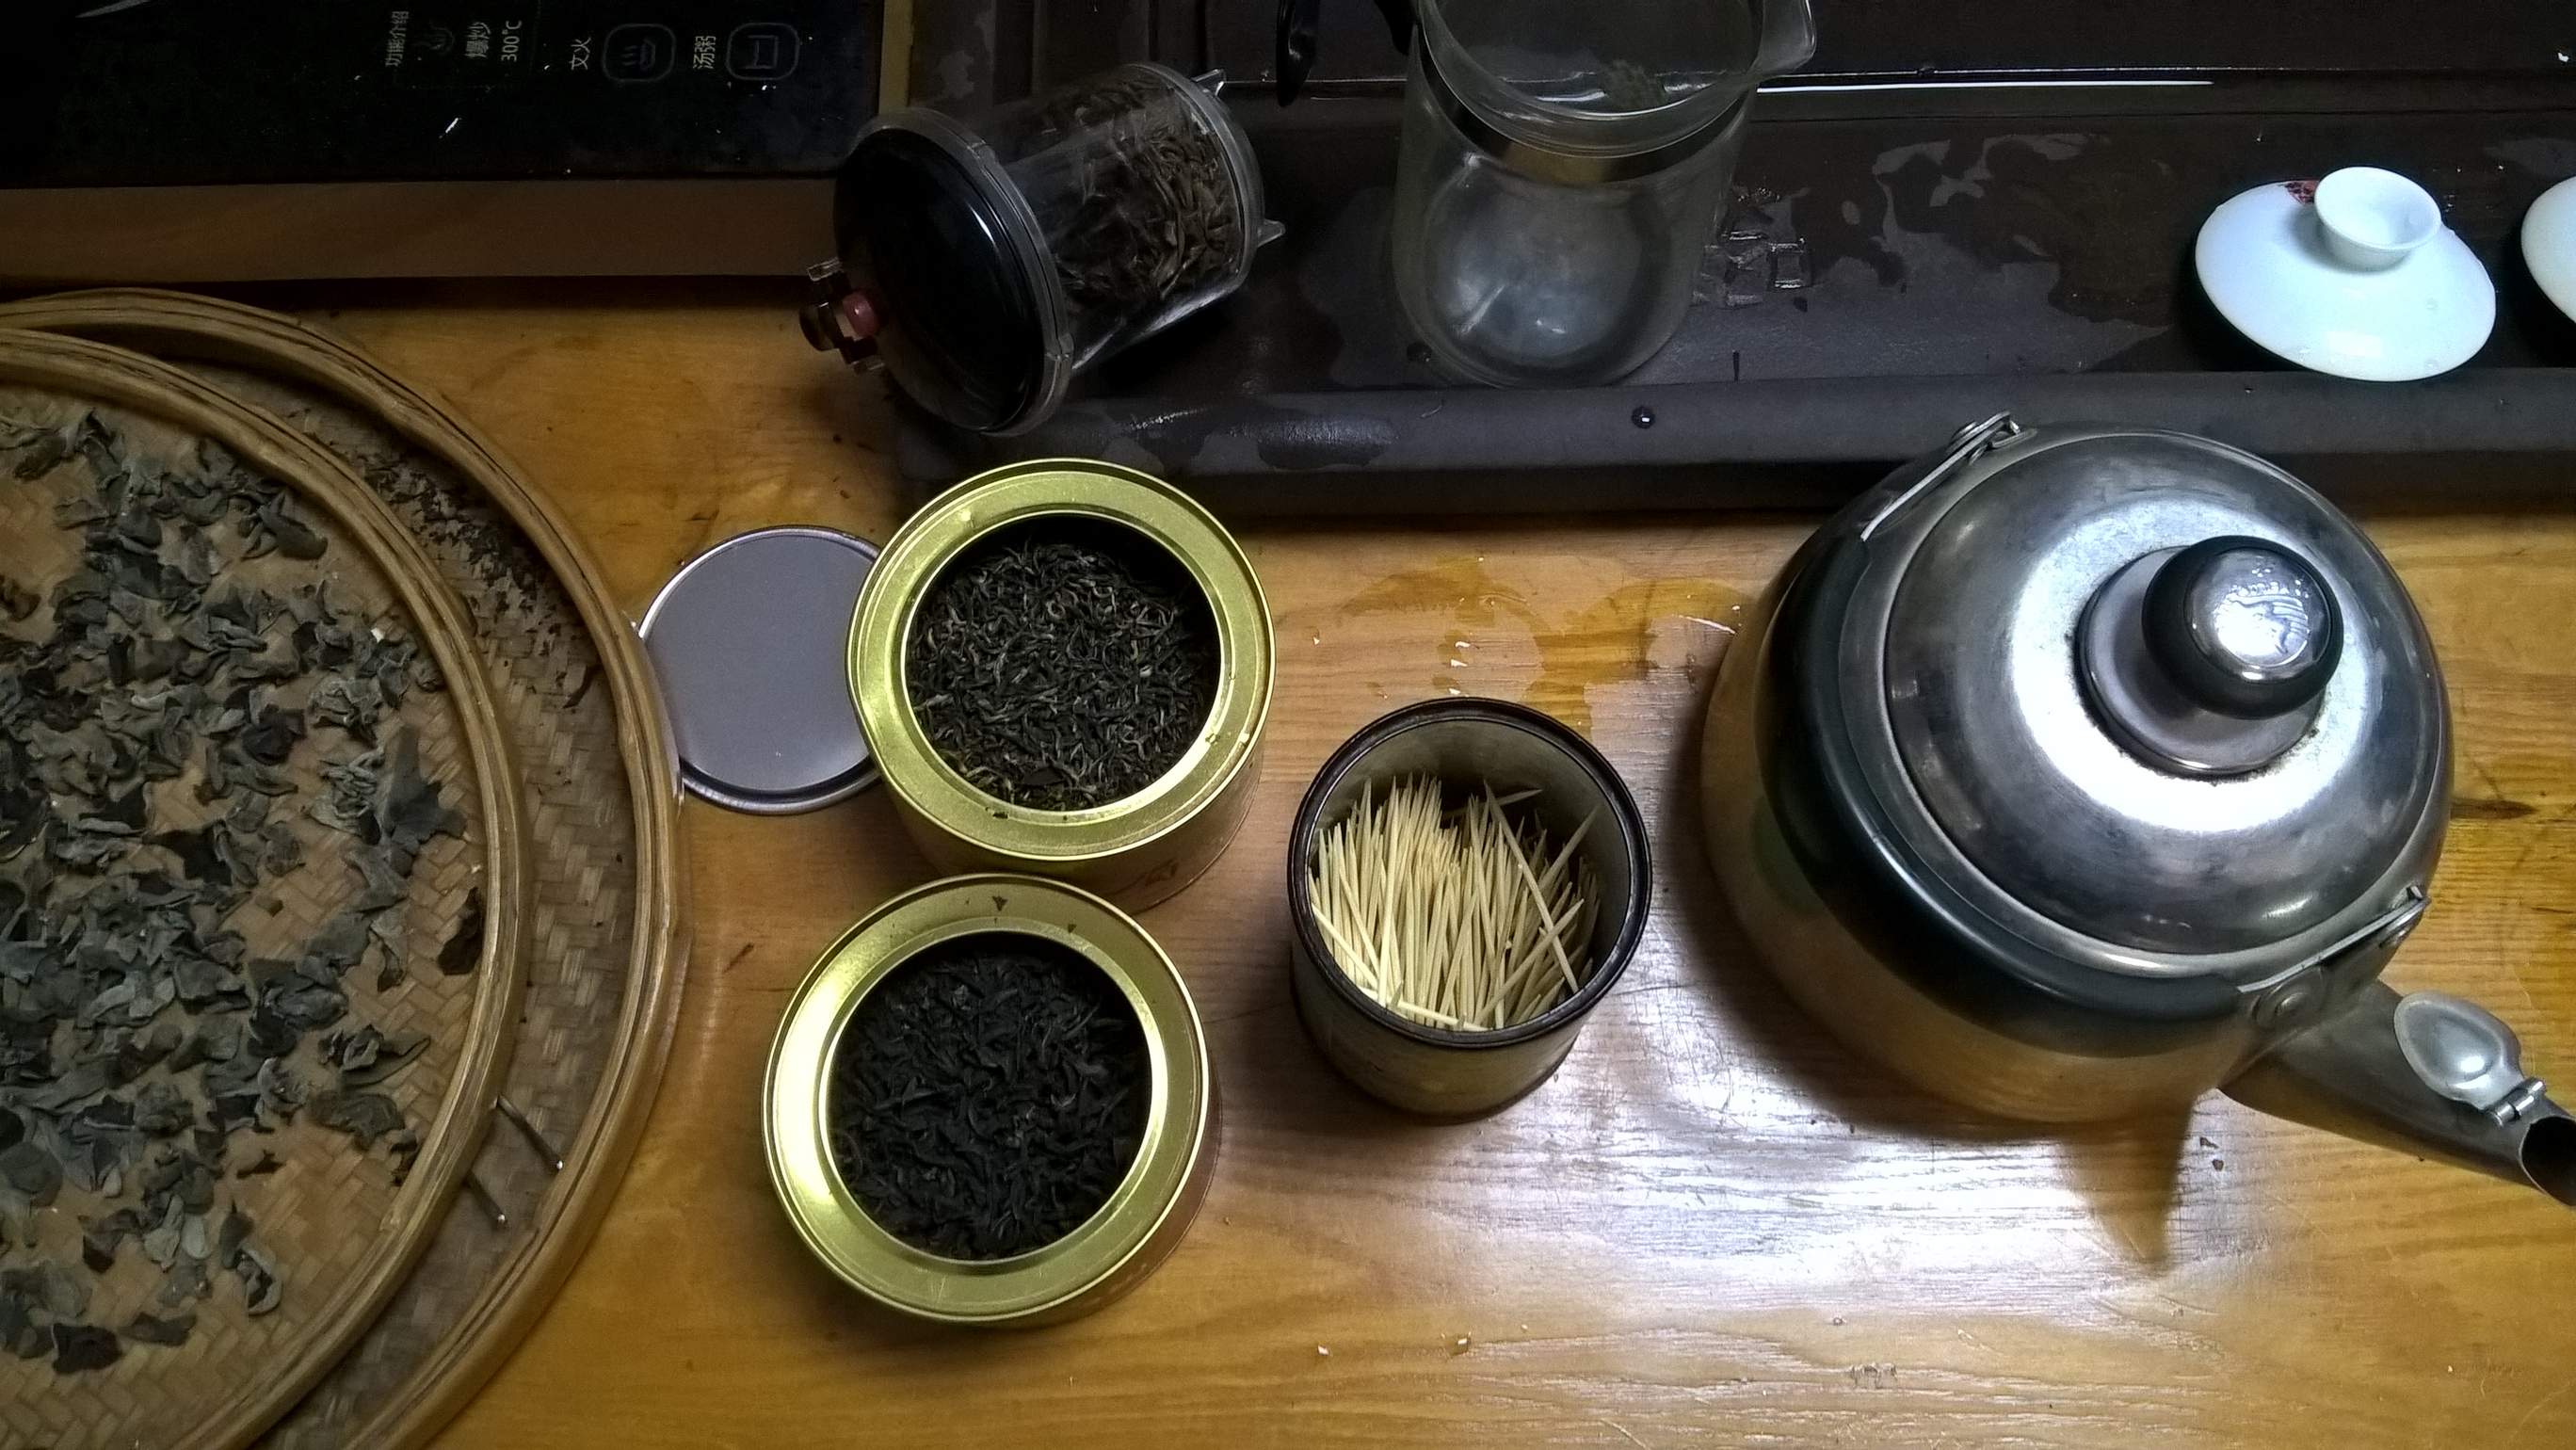 Chinese tea leaves and toothpicks.